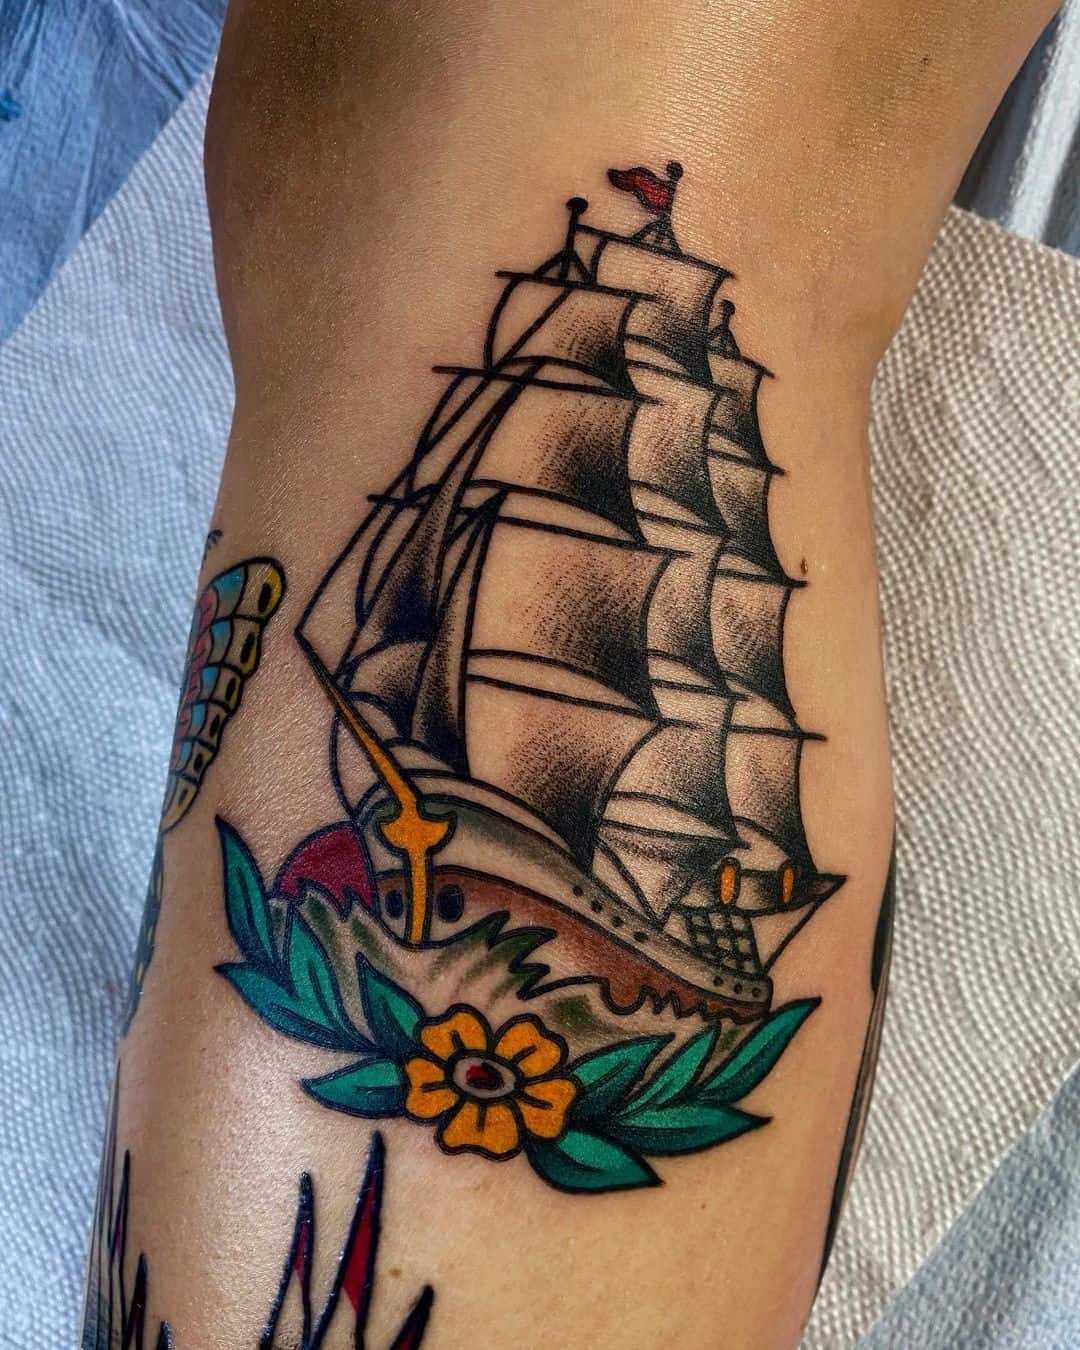 Ship tattoo 2